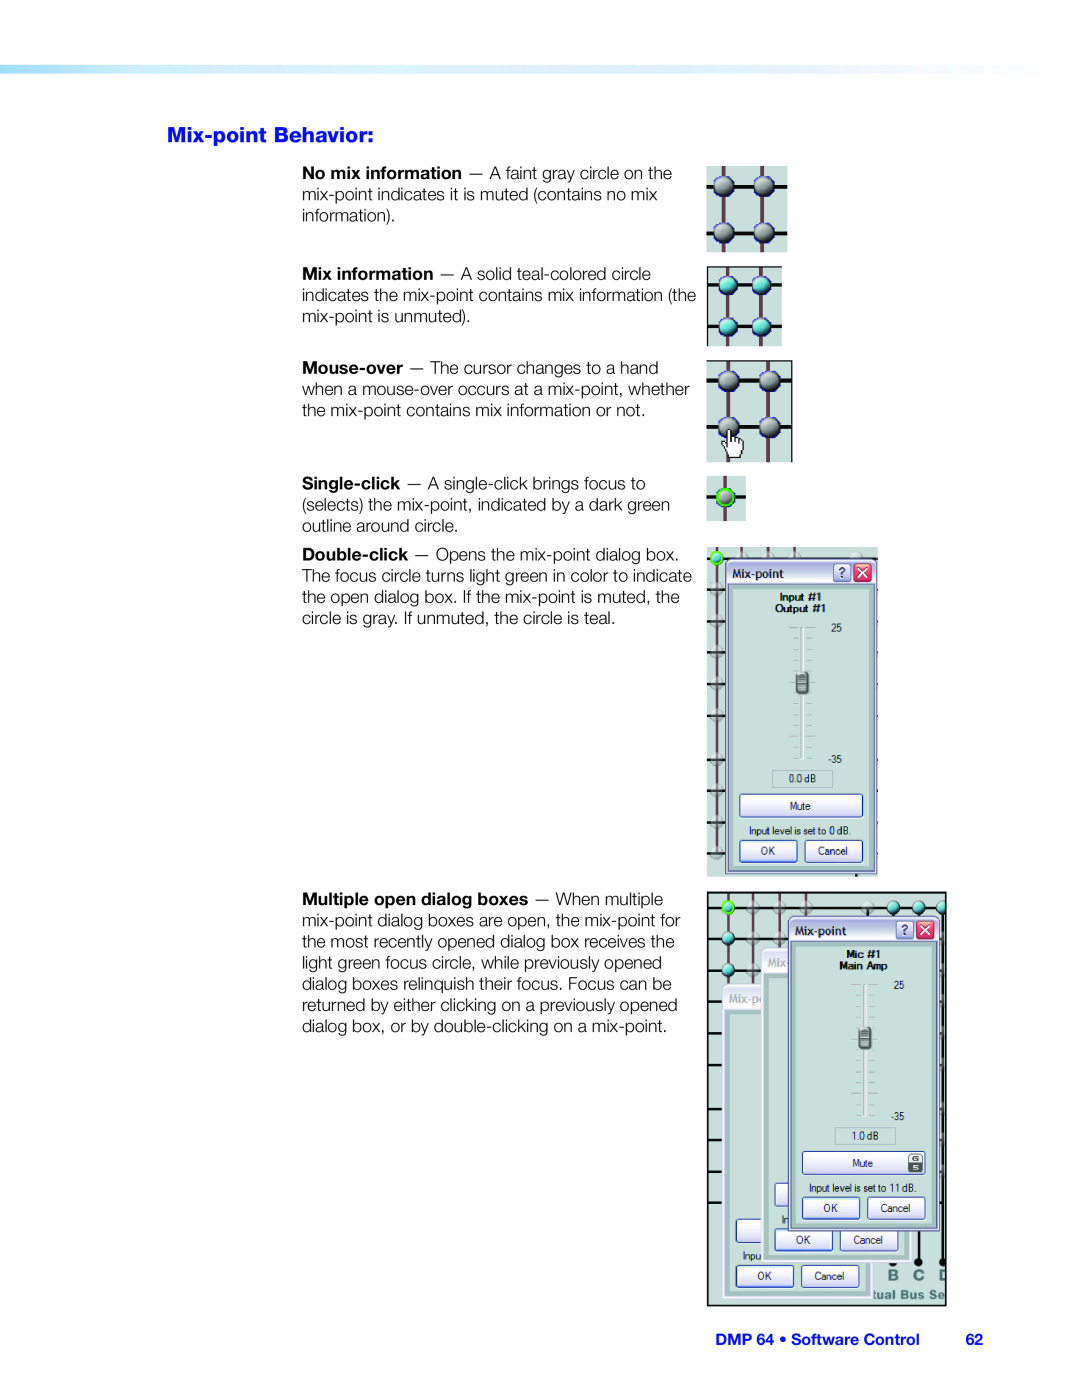 Extron electronic manual Mix-pointBehavior, DMP 64 • Software Control 